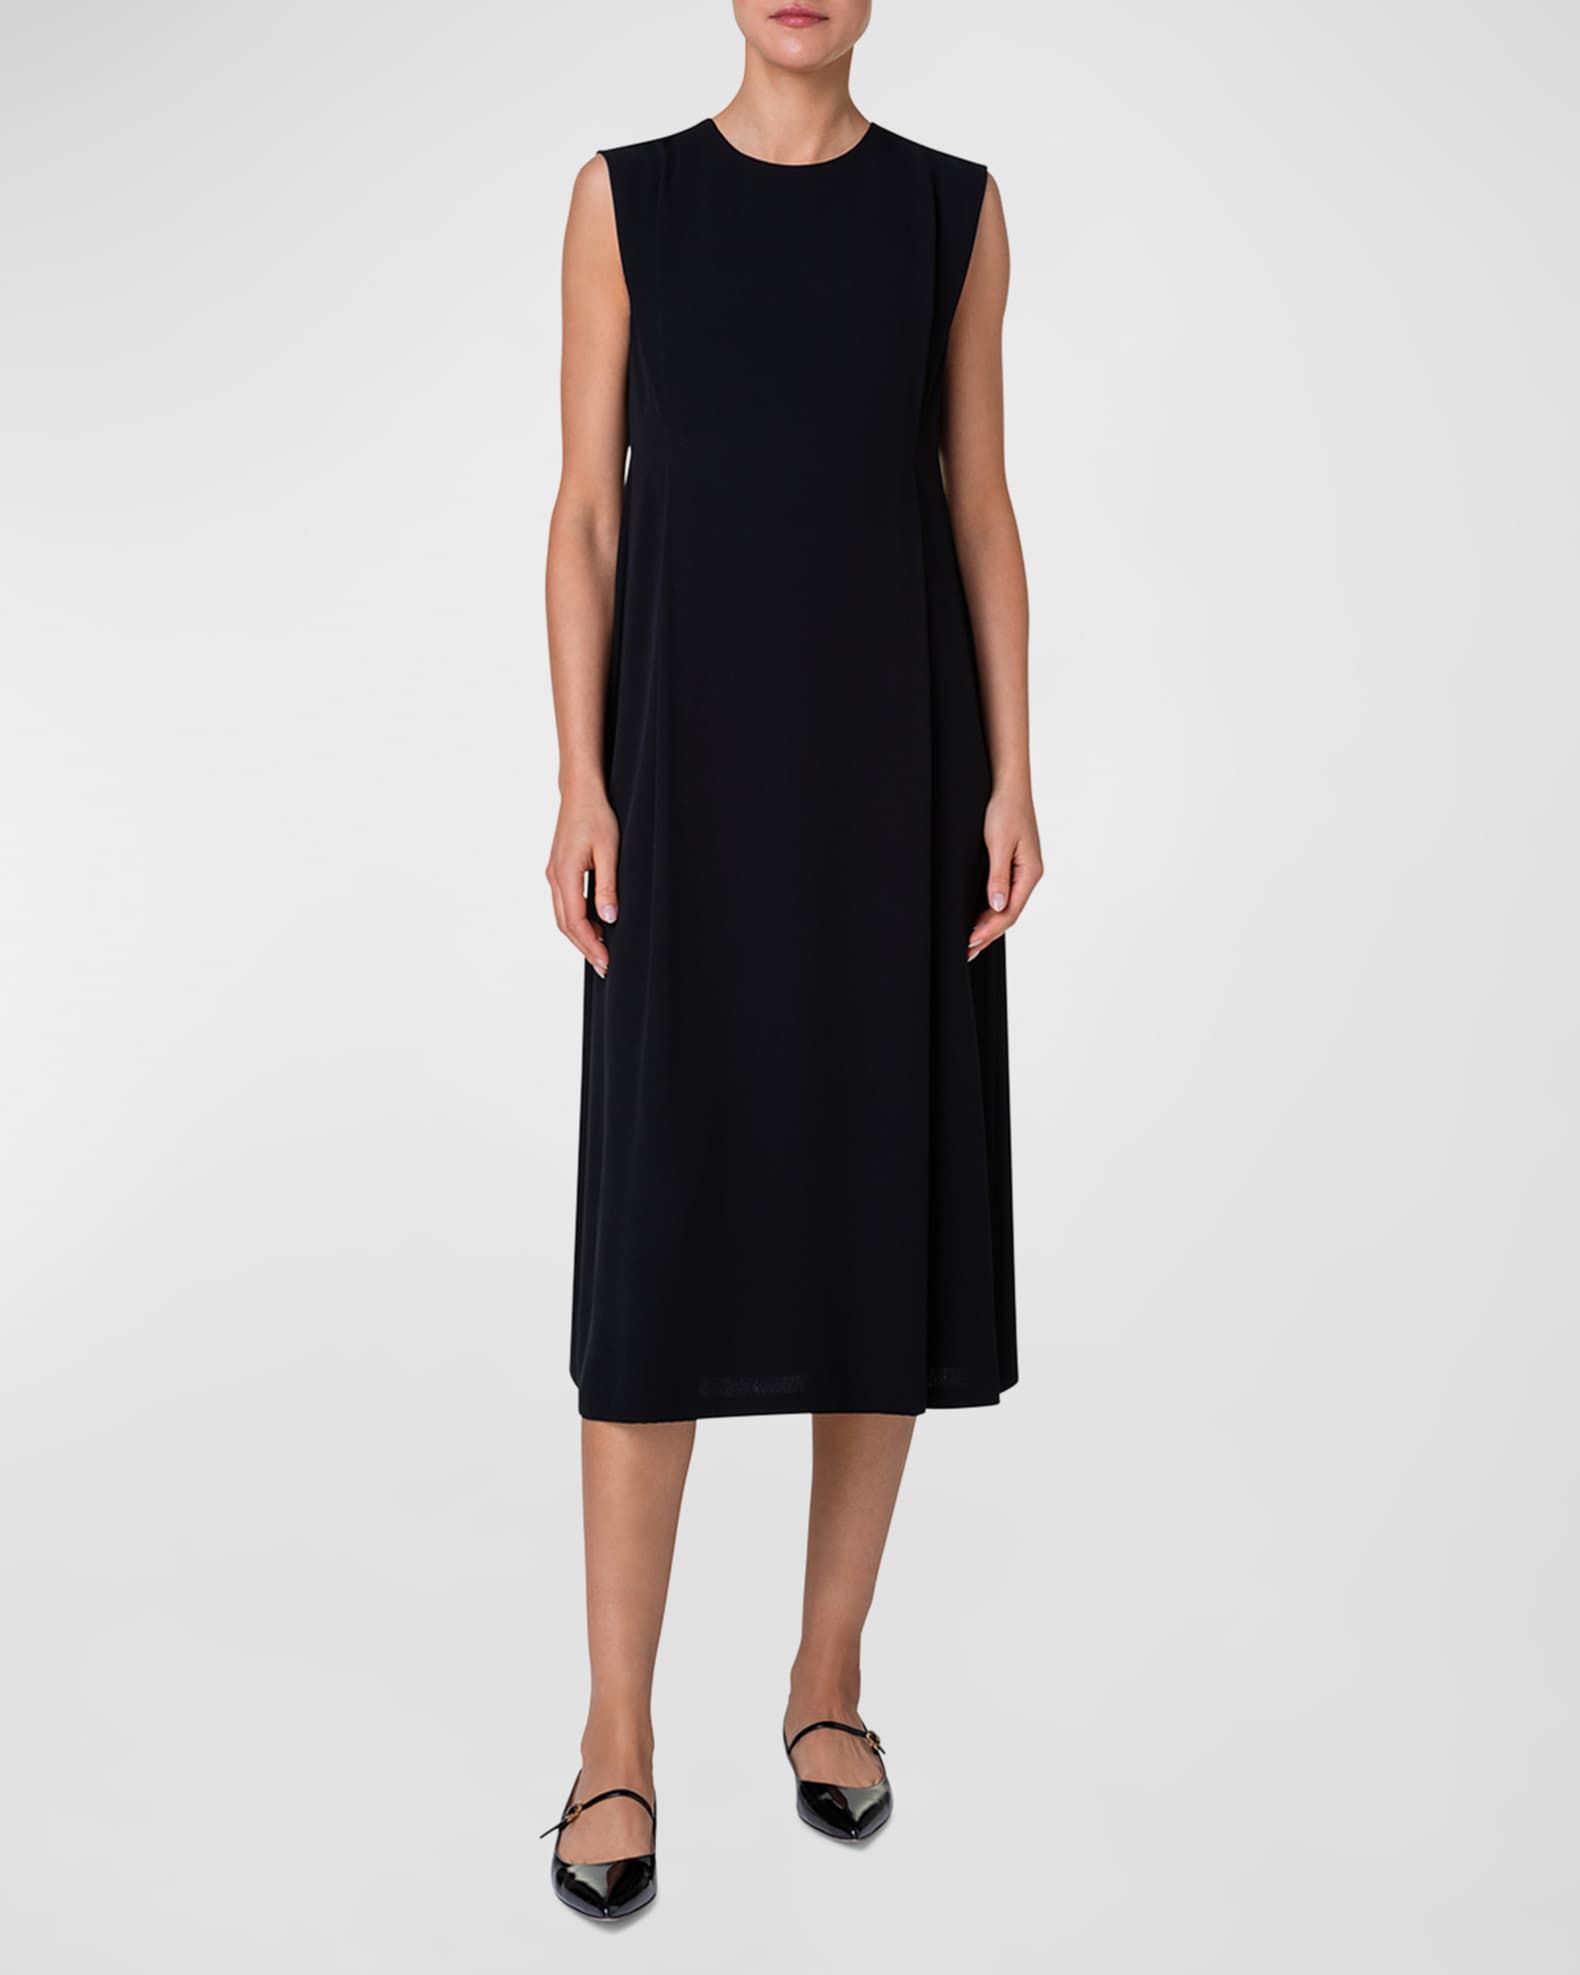 AKRIS PUNTO Sleeveless Plisse Detail Shift Black Dress size 4